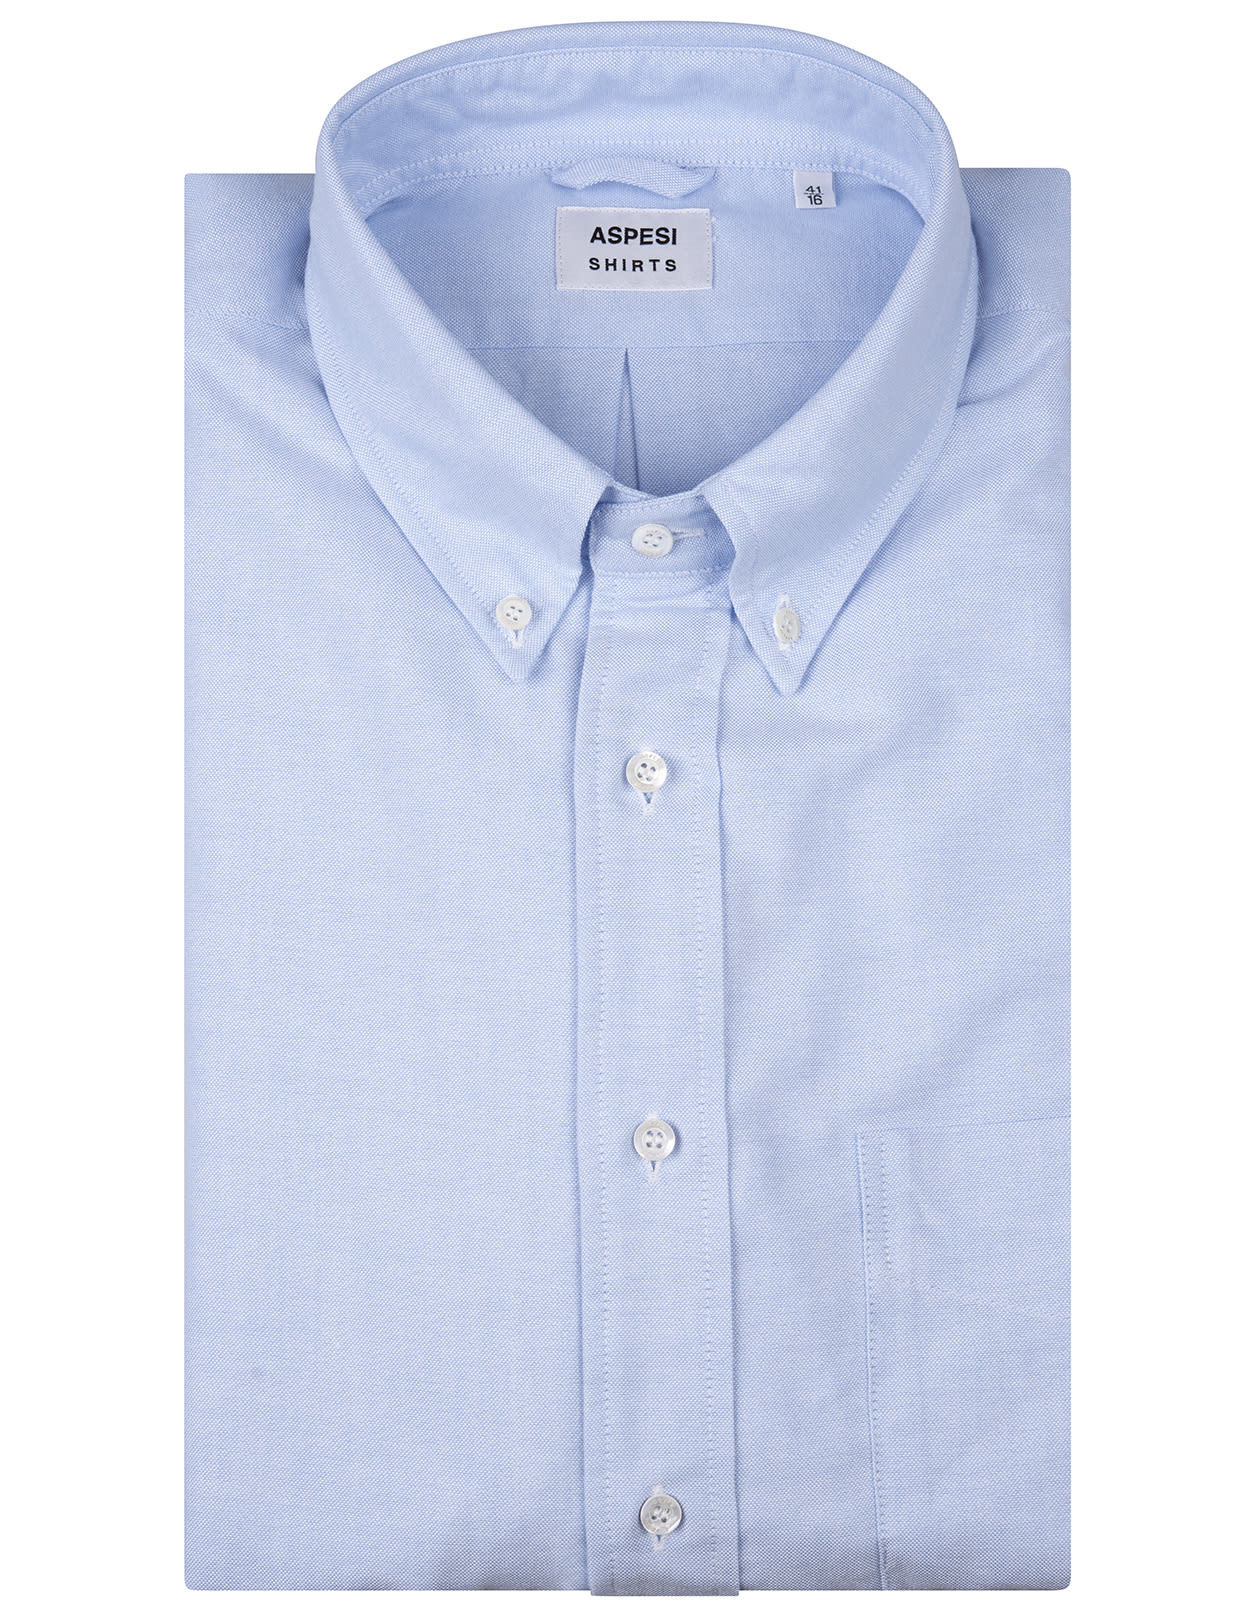 Aspesi Man Light Blue Oxford Cotton Shirt